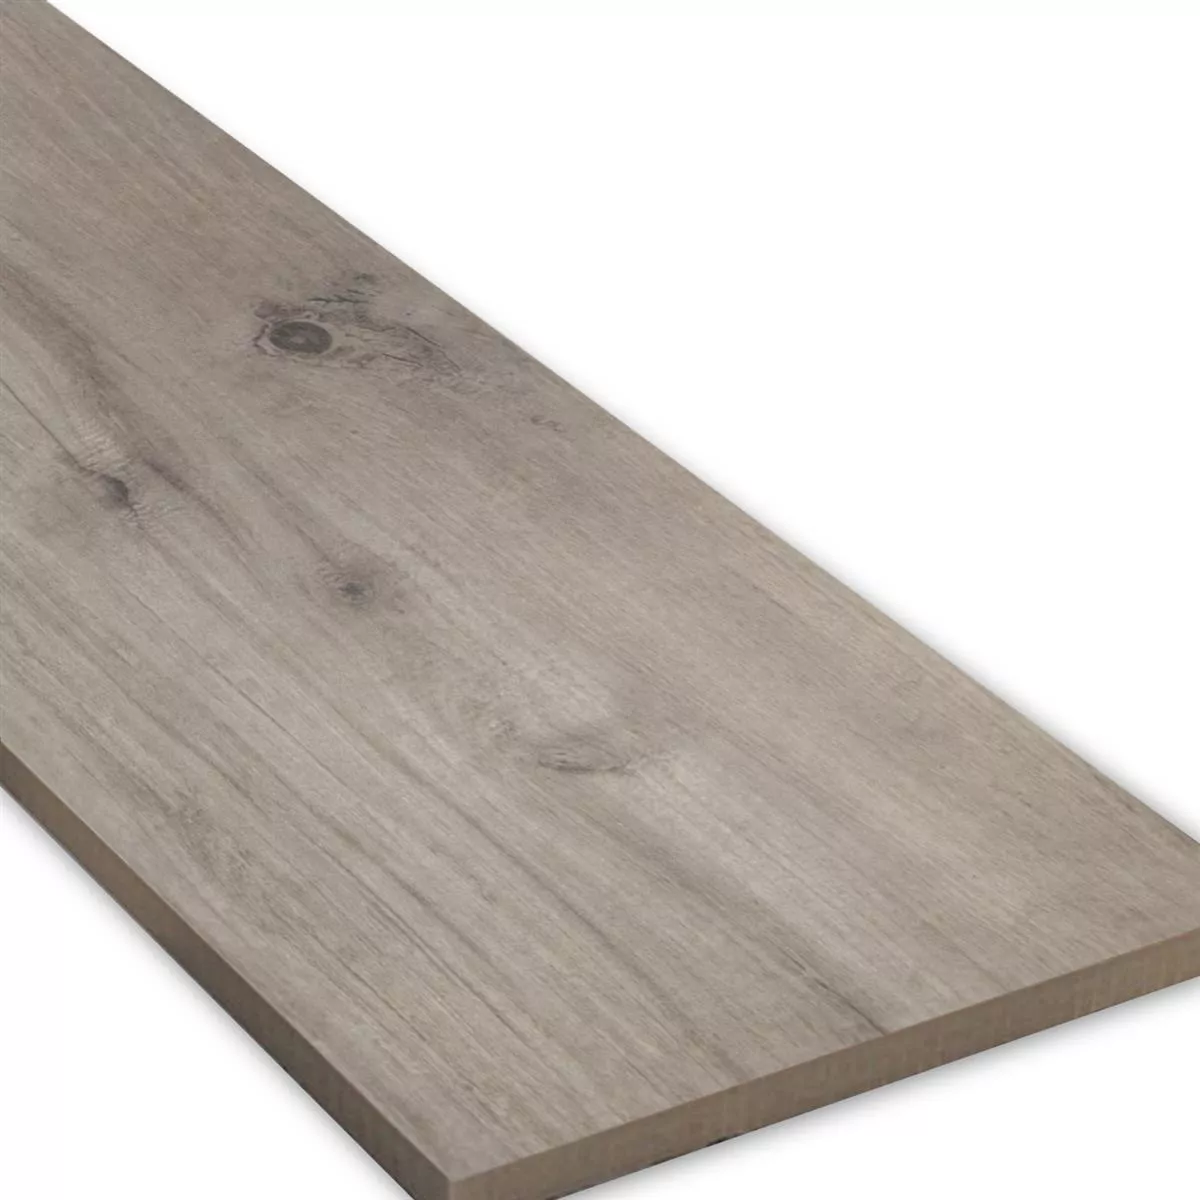 Sample Floor Tiles Wood Optic Emparrado Lachs 30x120cm